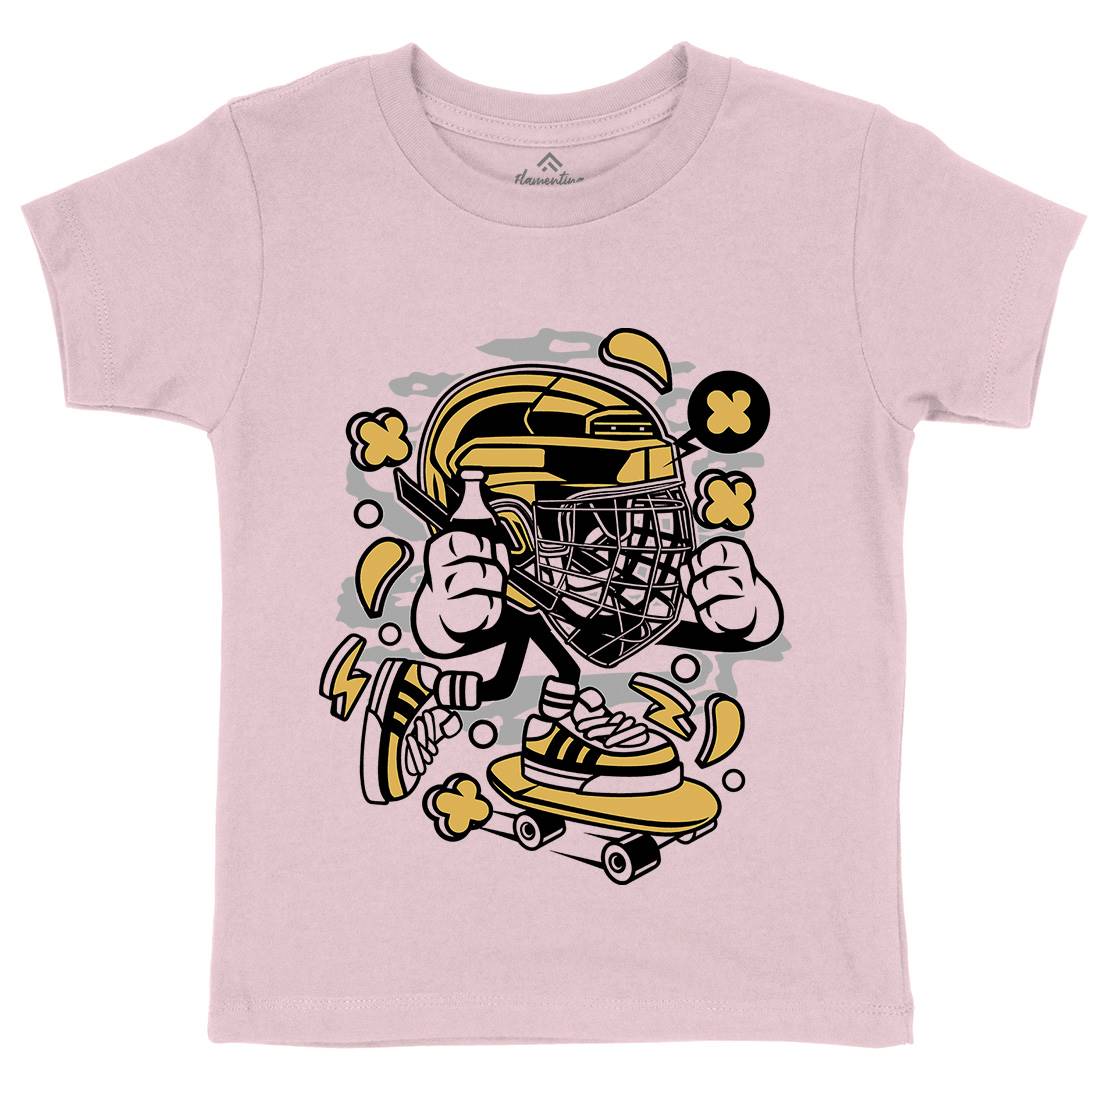 Hockey Skater Kids Crew Neck T-Shirt Sport C143